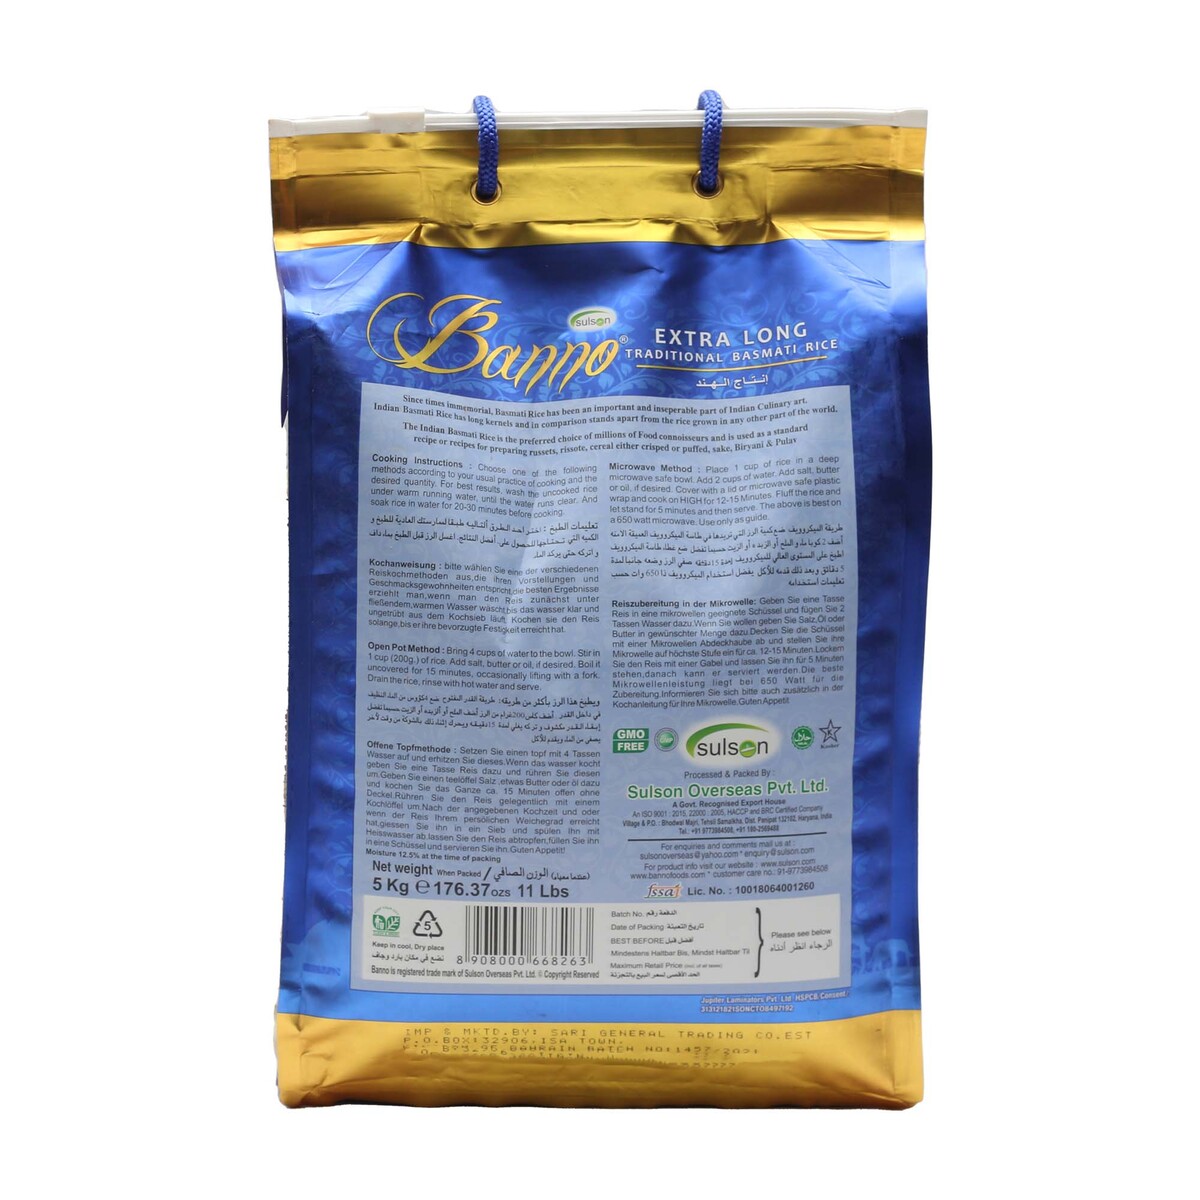 Banno Traditional Indian Basmati Rice Extra Long 5kg